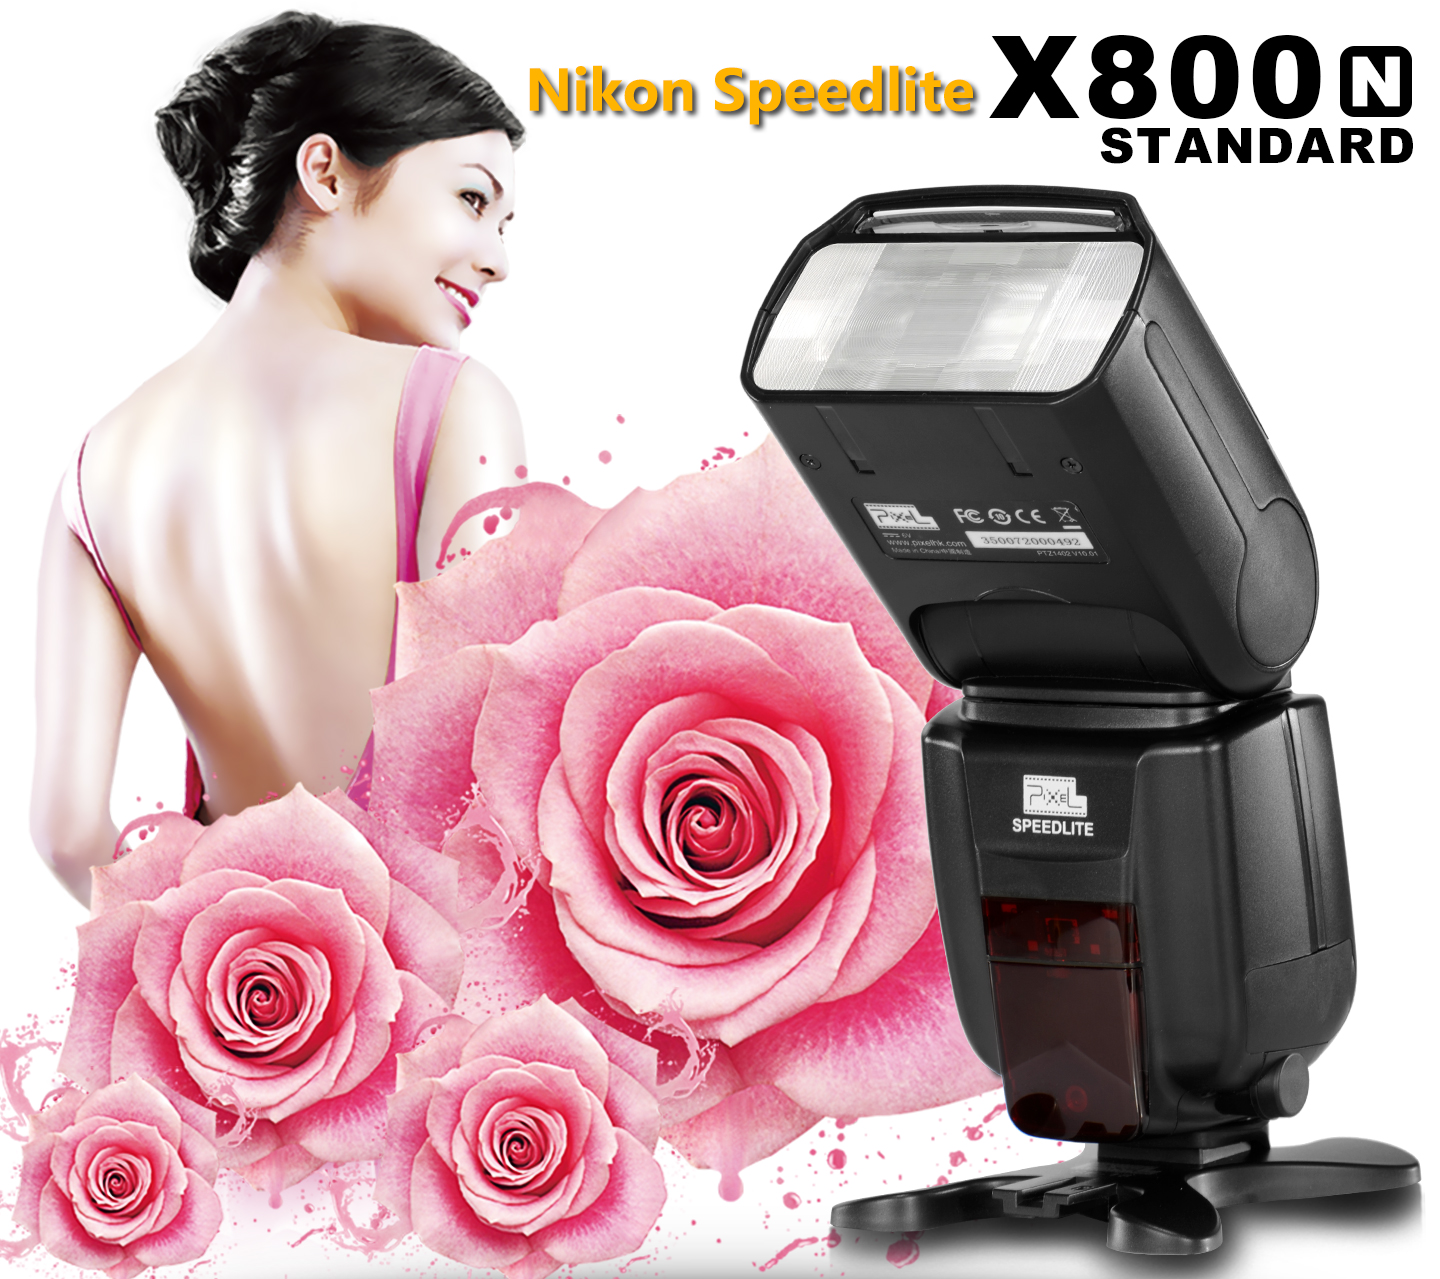 Nikon Speedlite X800N STANDANRD